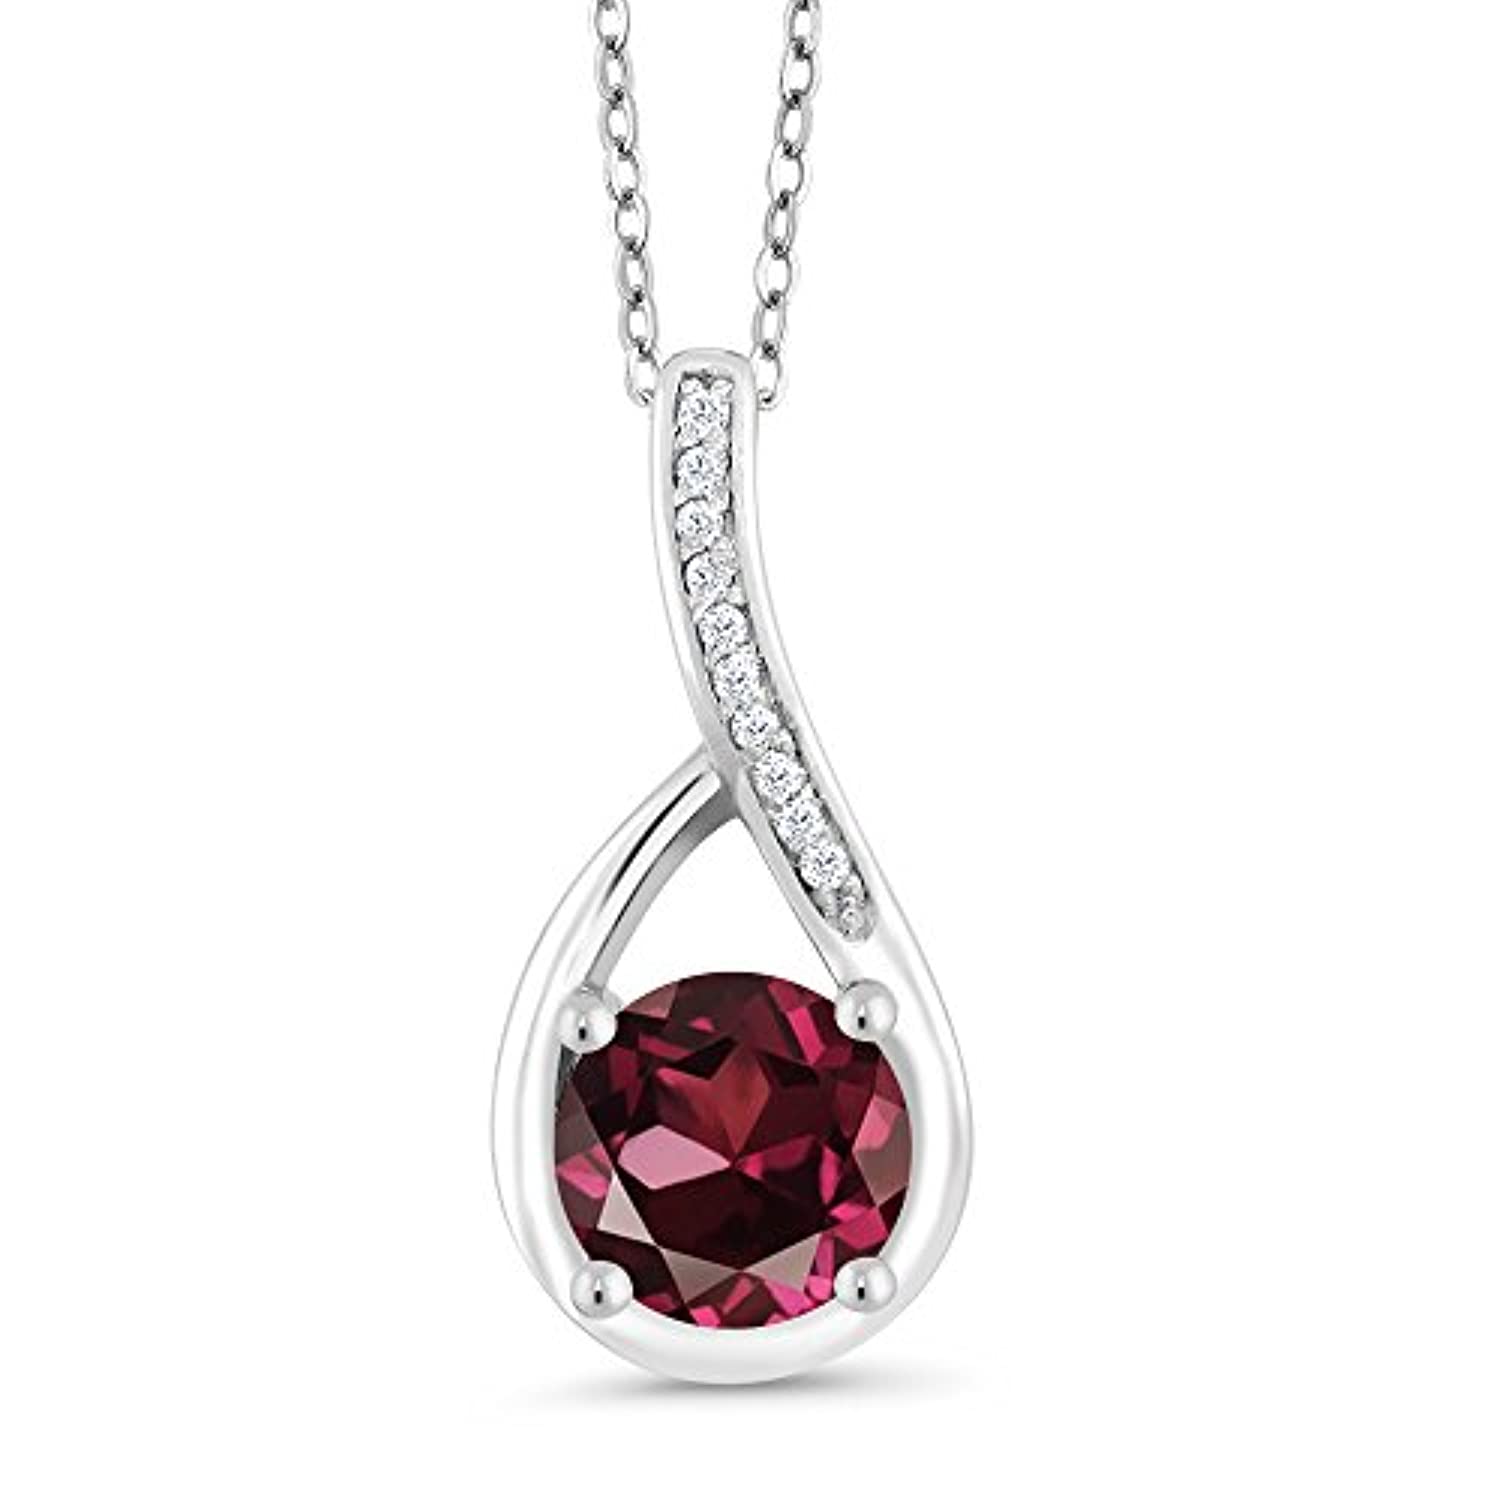 Red Rhodolite Garnet and DiamondInfinity Pendant Necklace